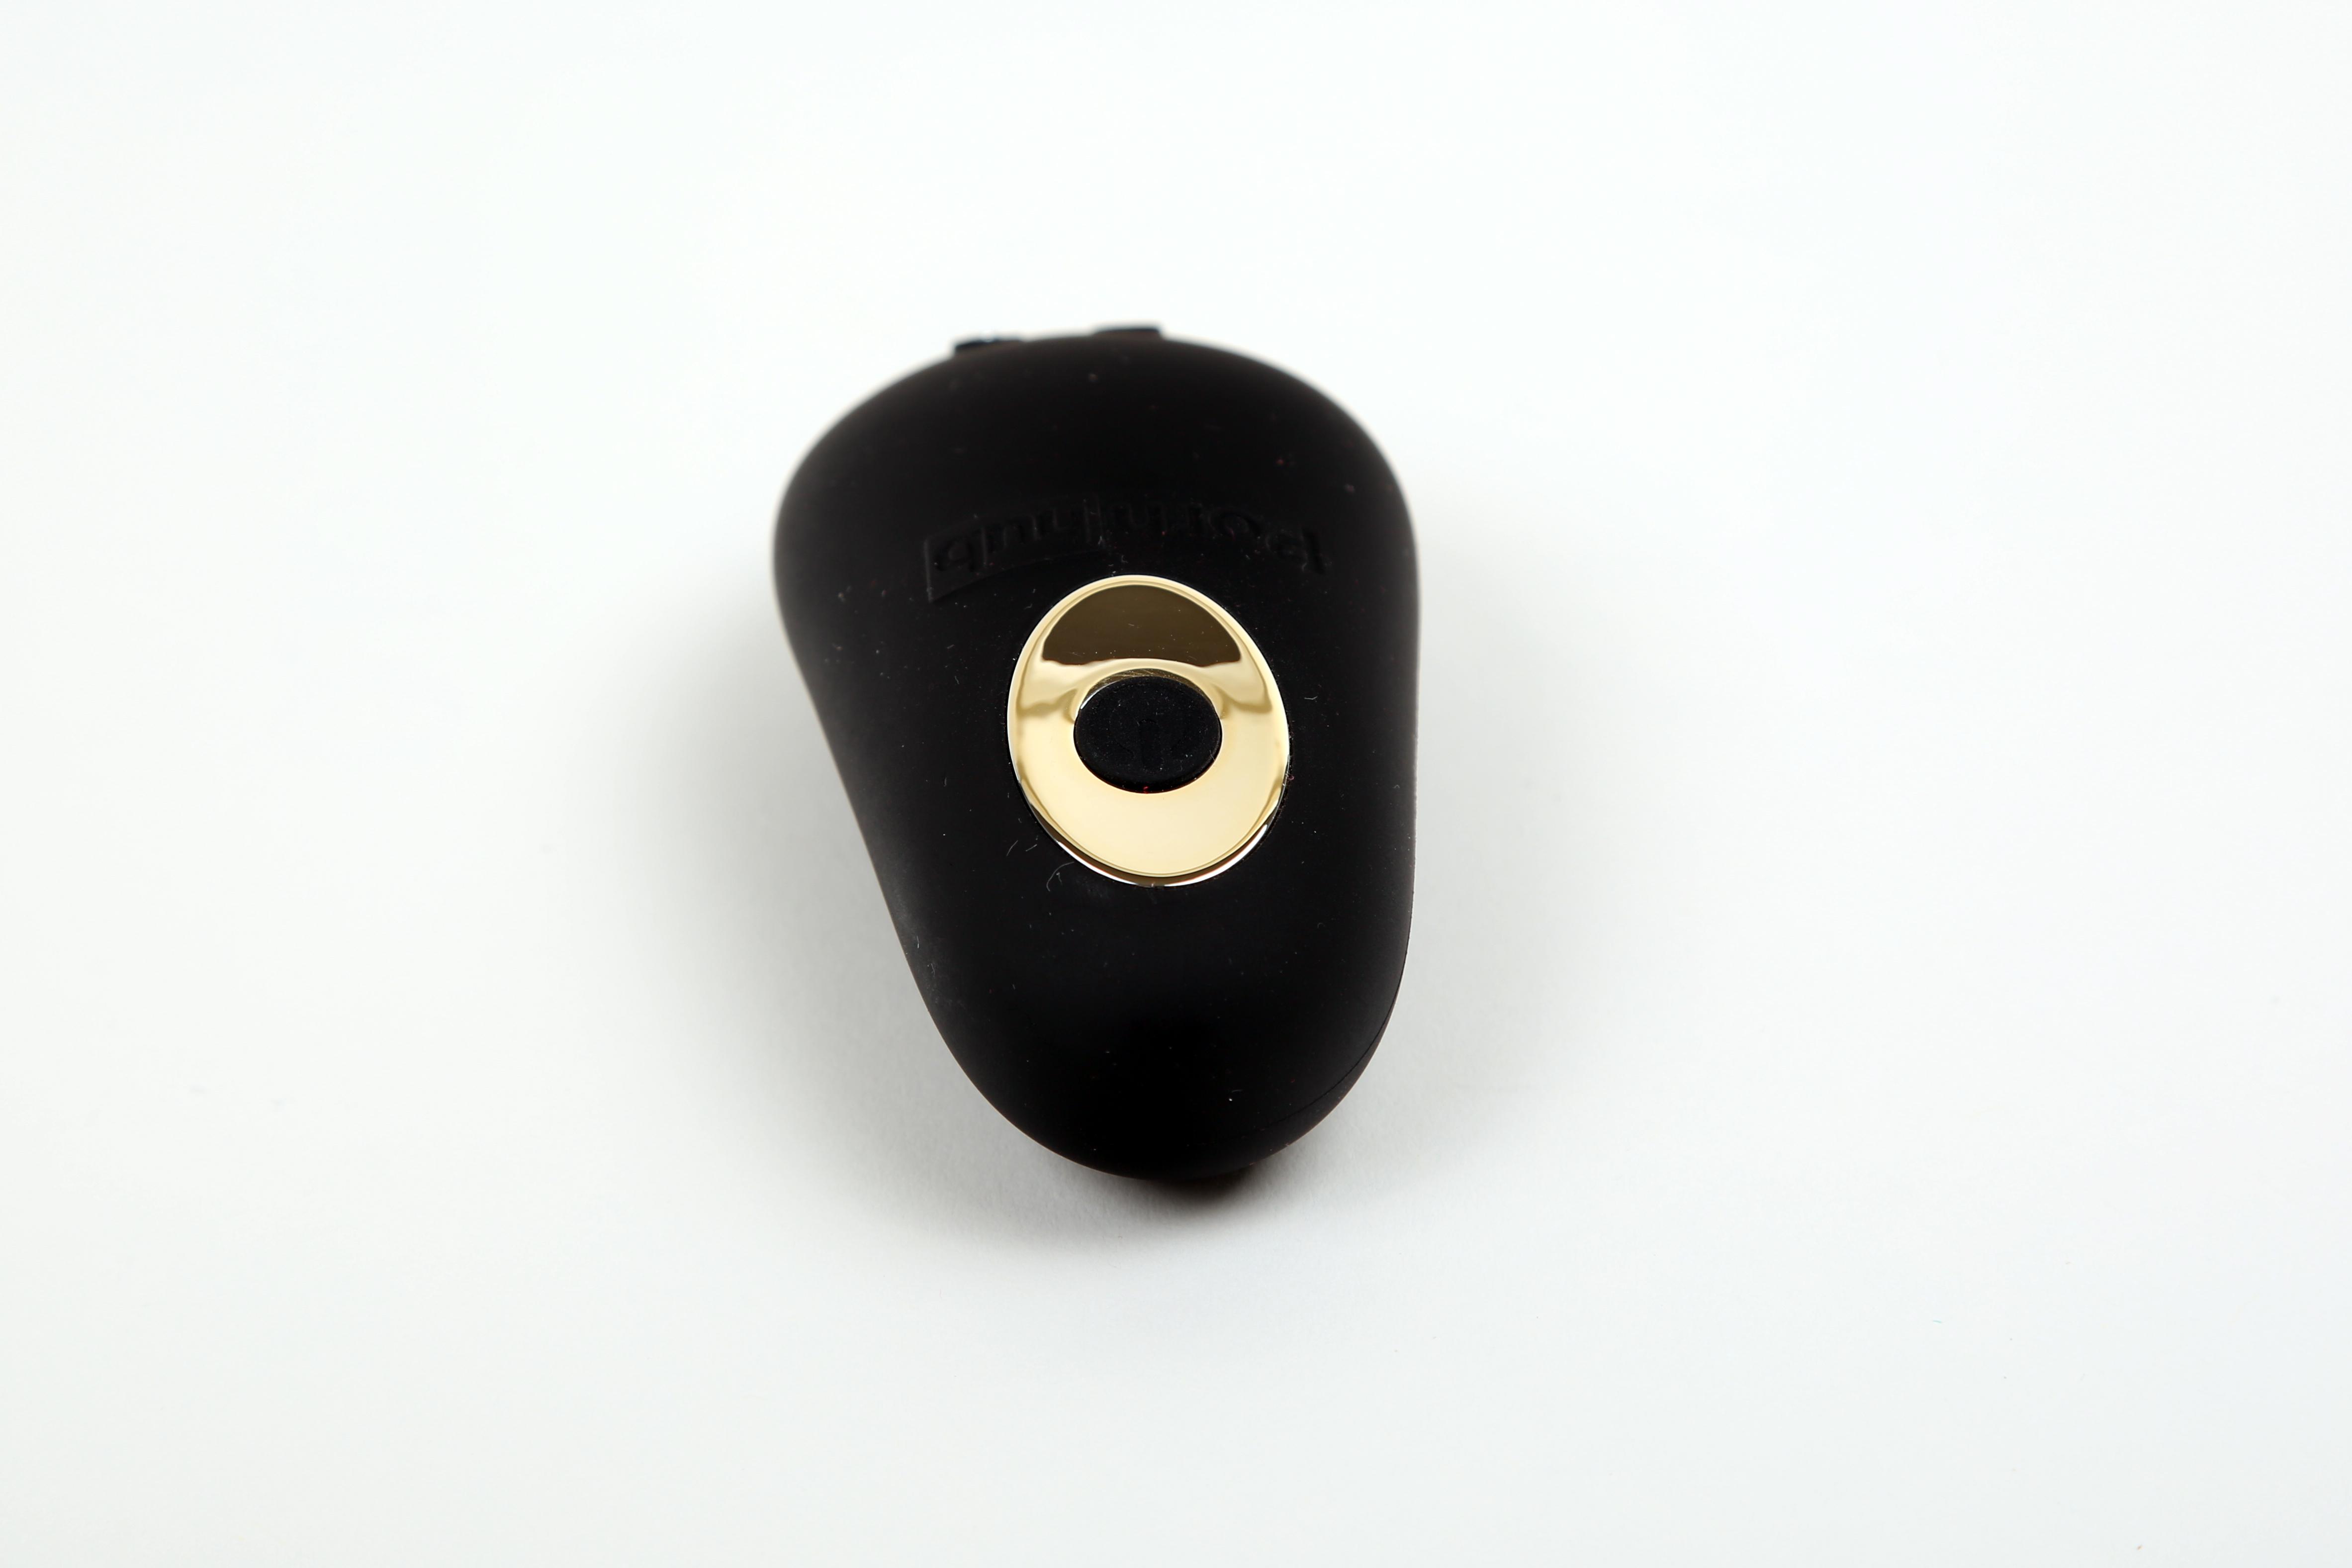 Pornhub Toys Tempest Clitoral Vibrator, Black/Gold, 9 cm